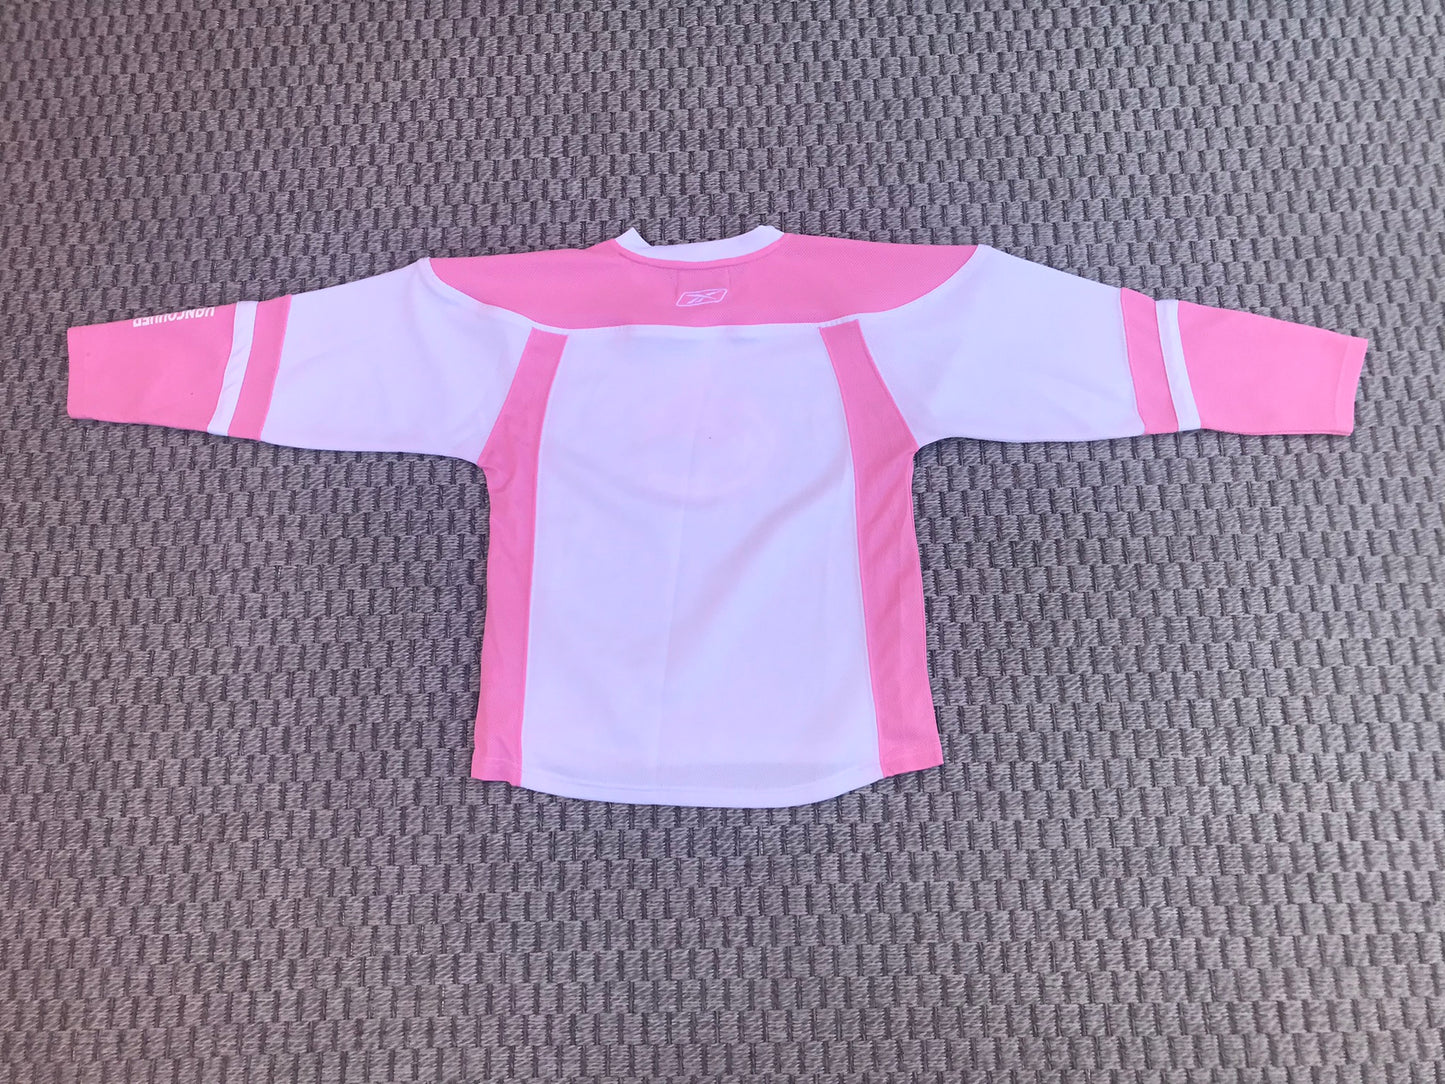 Hockey Jersey Child Size 12-14 Vancouver Canucks Pink White Like New